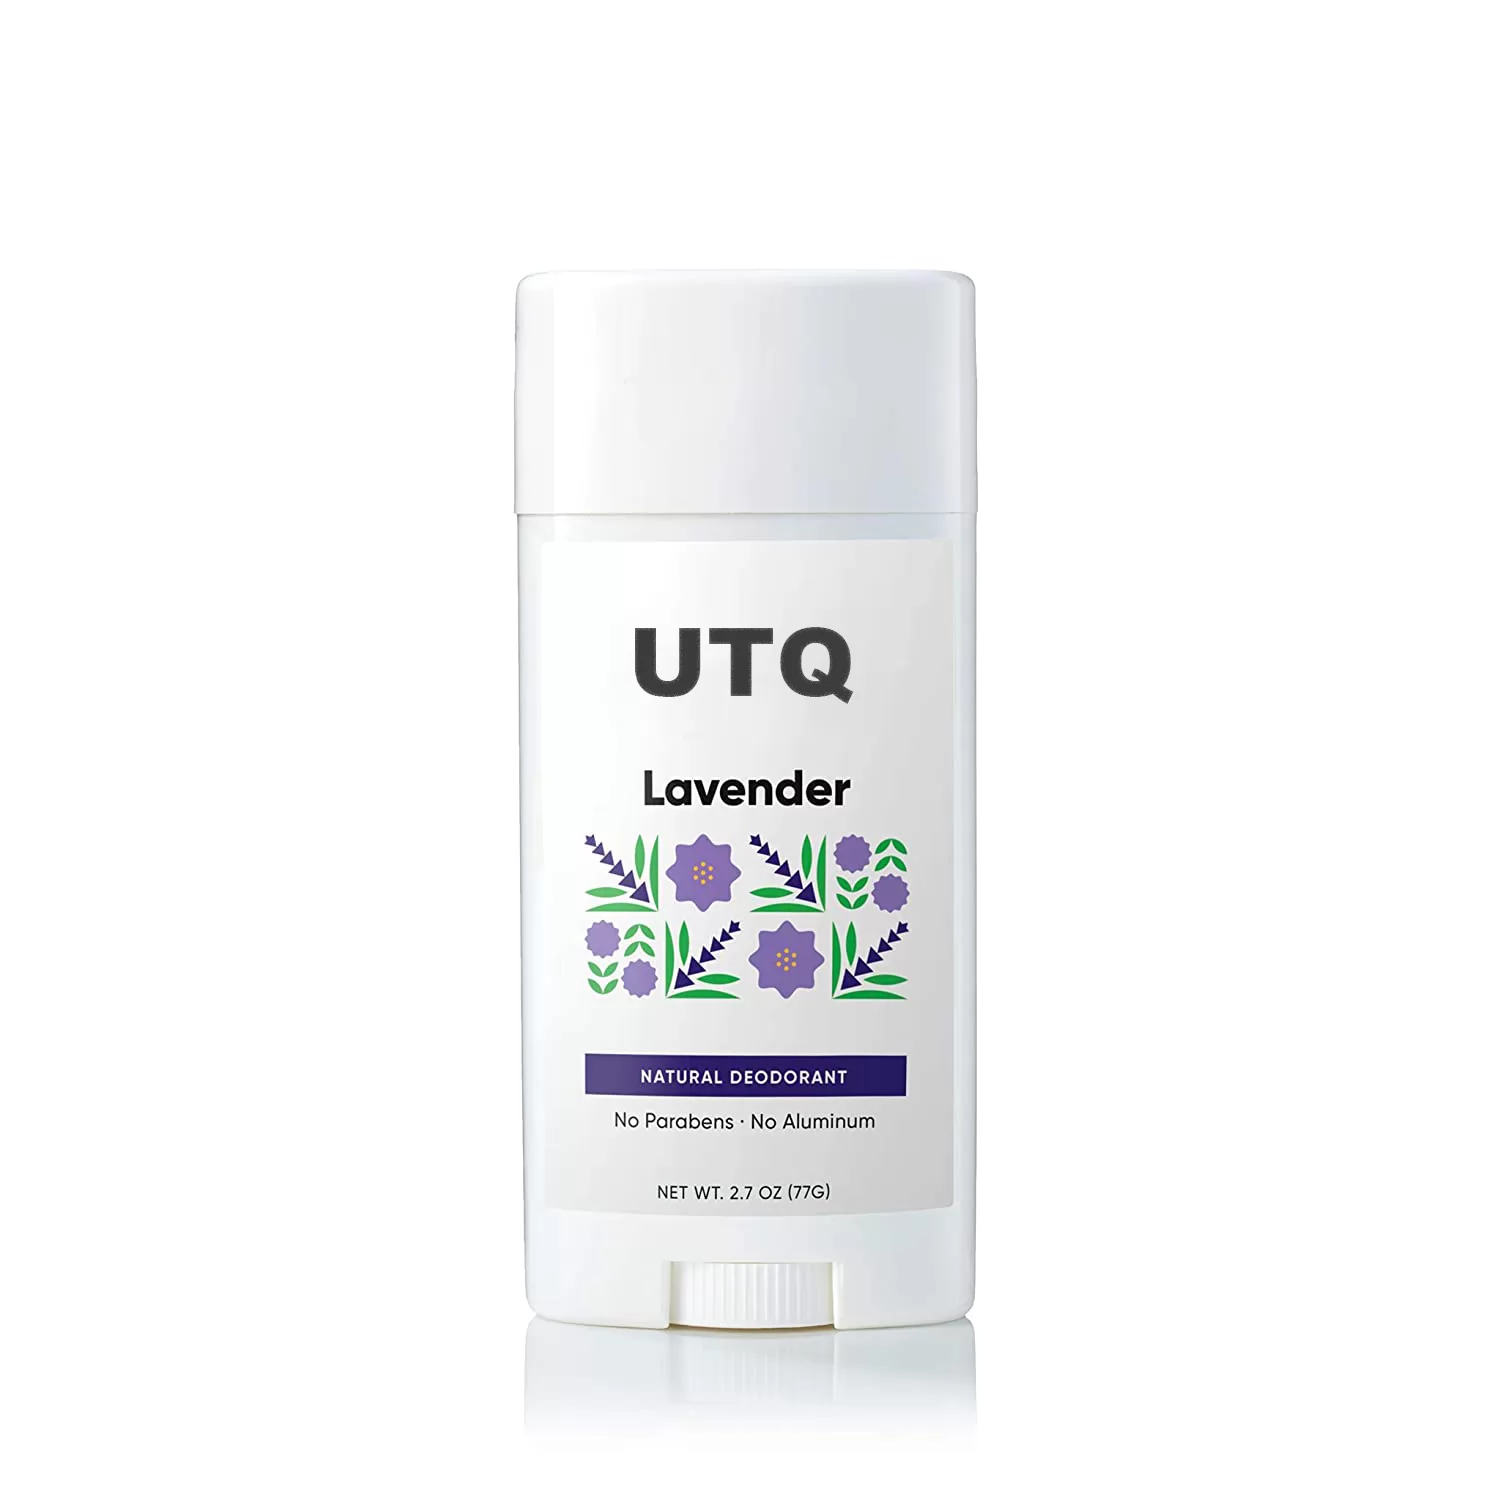 UTQ Natural Deodorant Stick - No Aluminum Deodorant for Women, Men, Teens, Kids – Paraben Sulfate Free Solid Deodorant